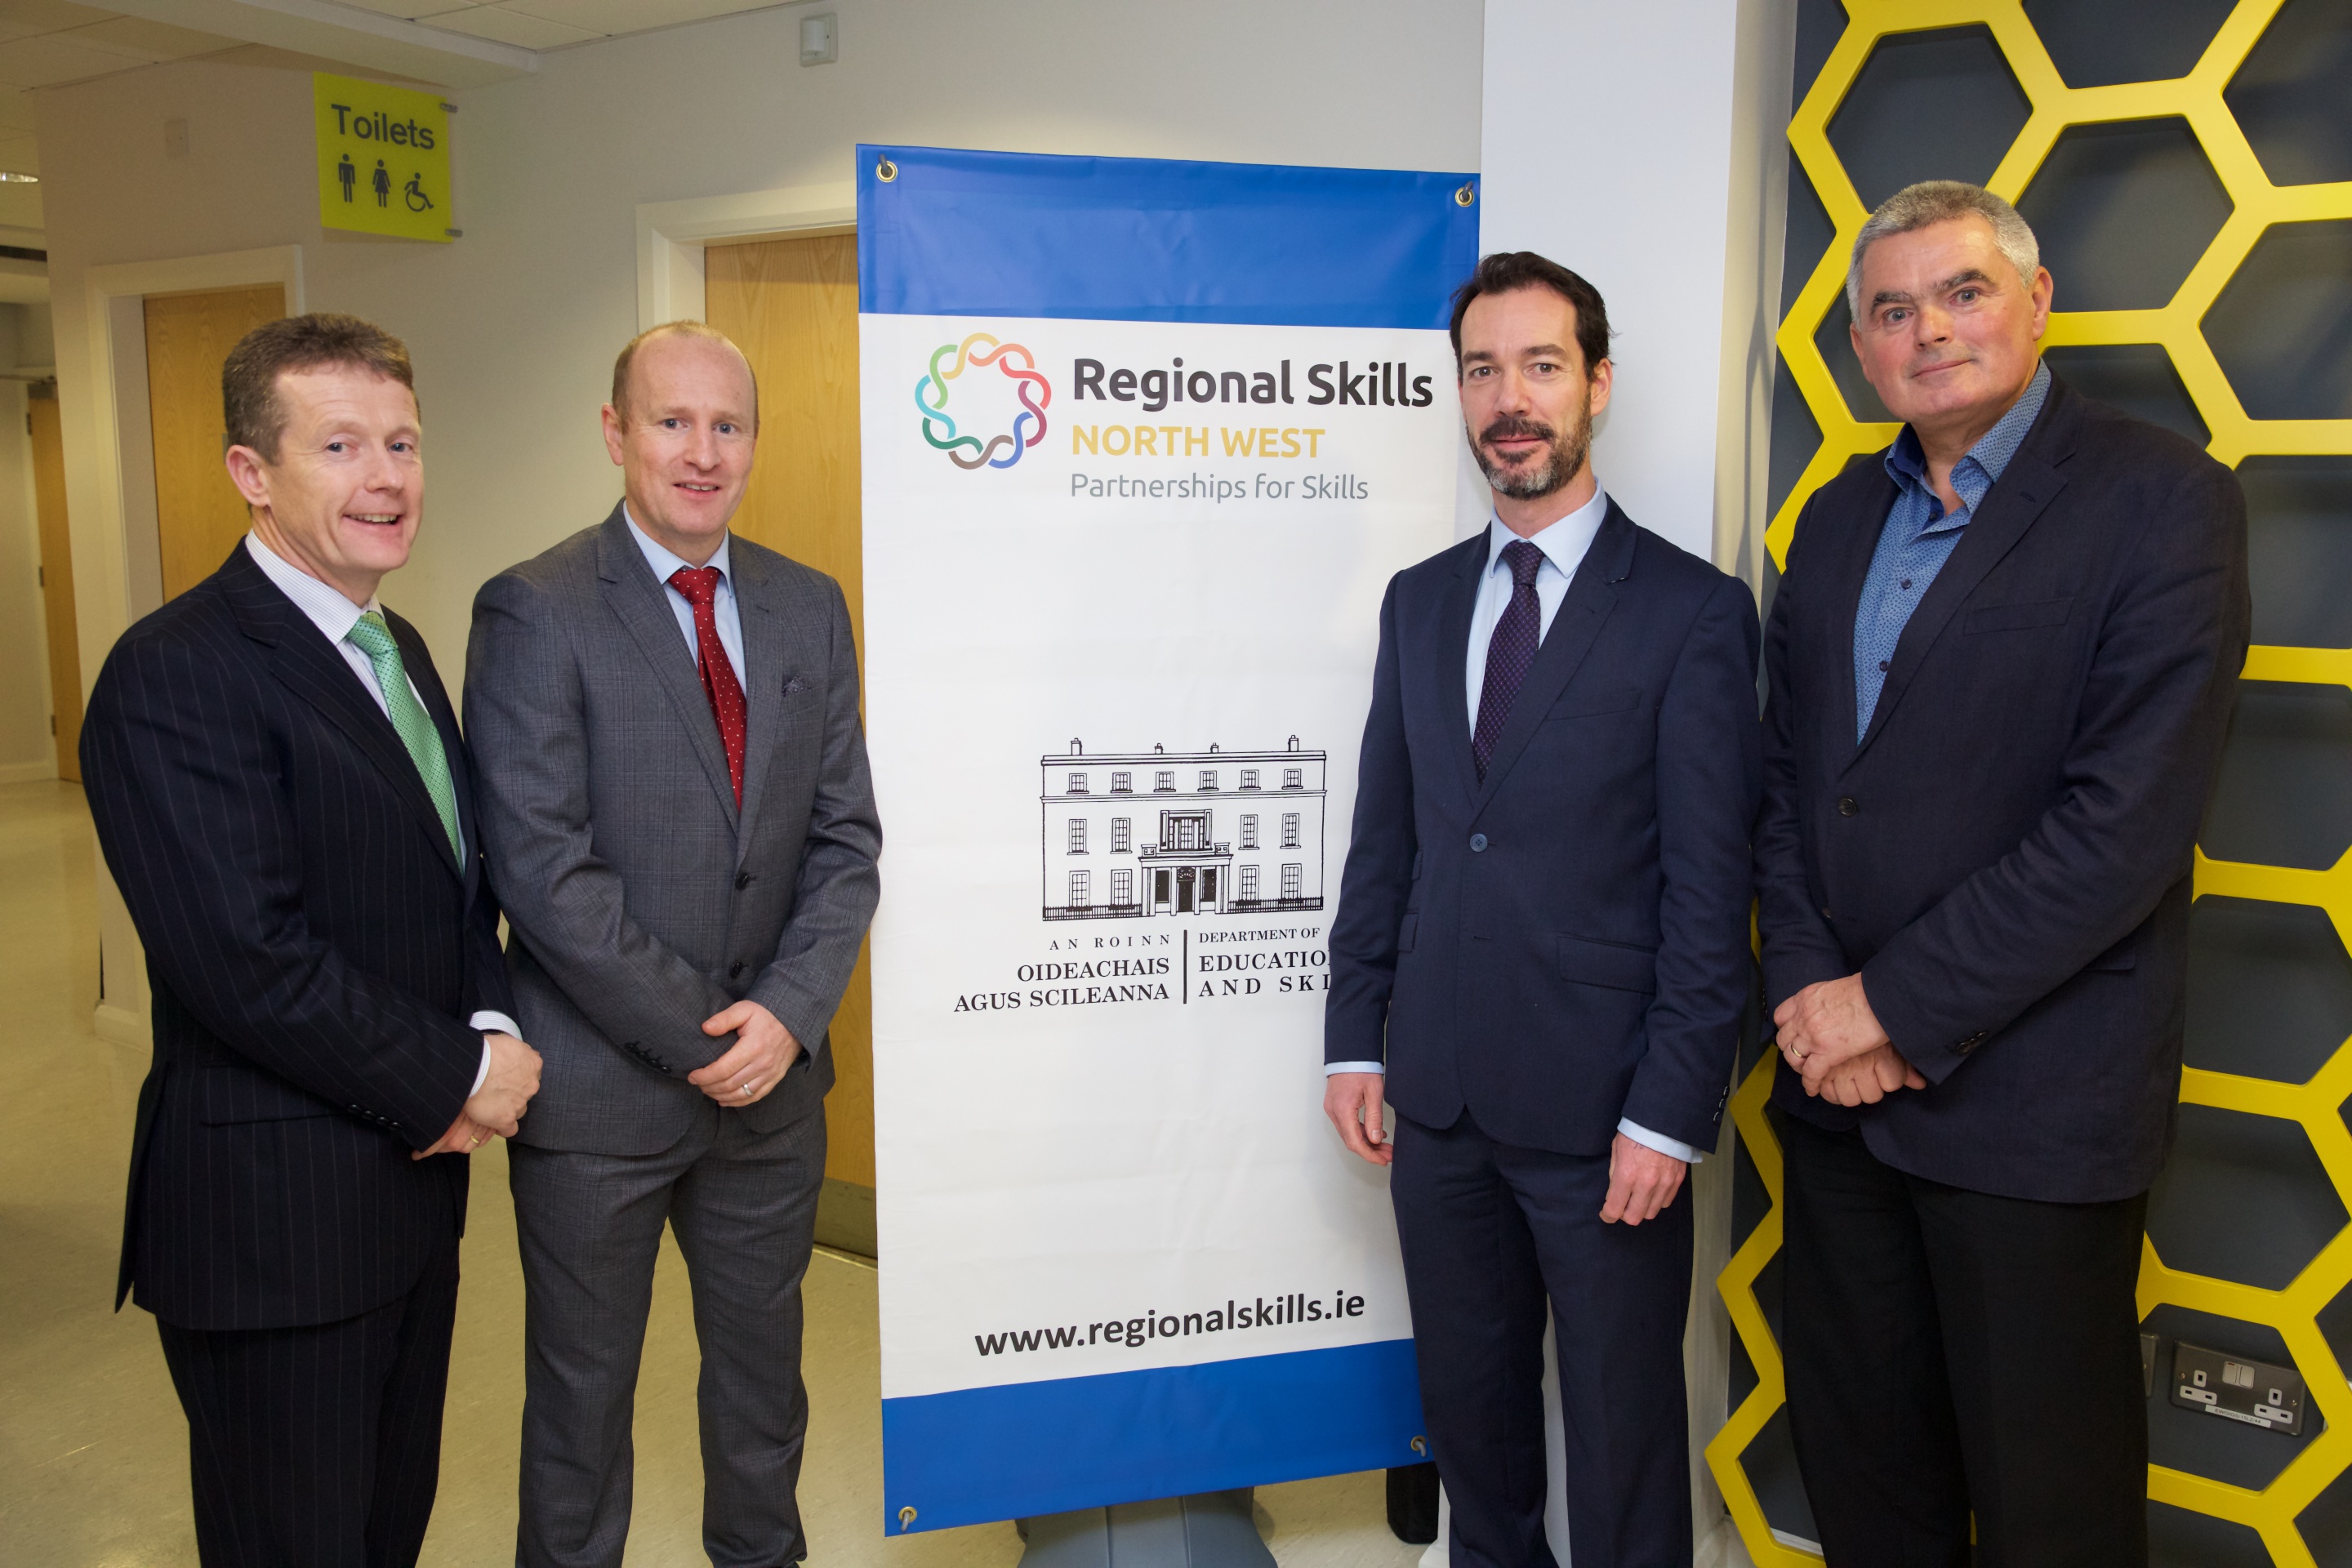 Regional Skills Forum